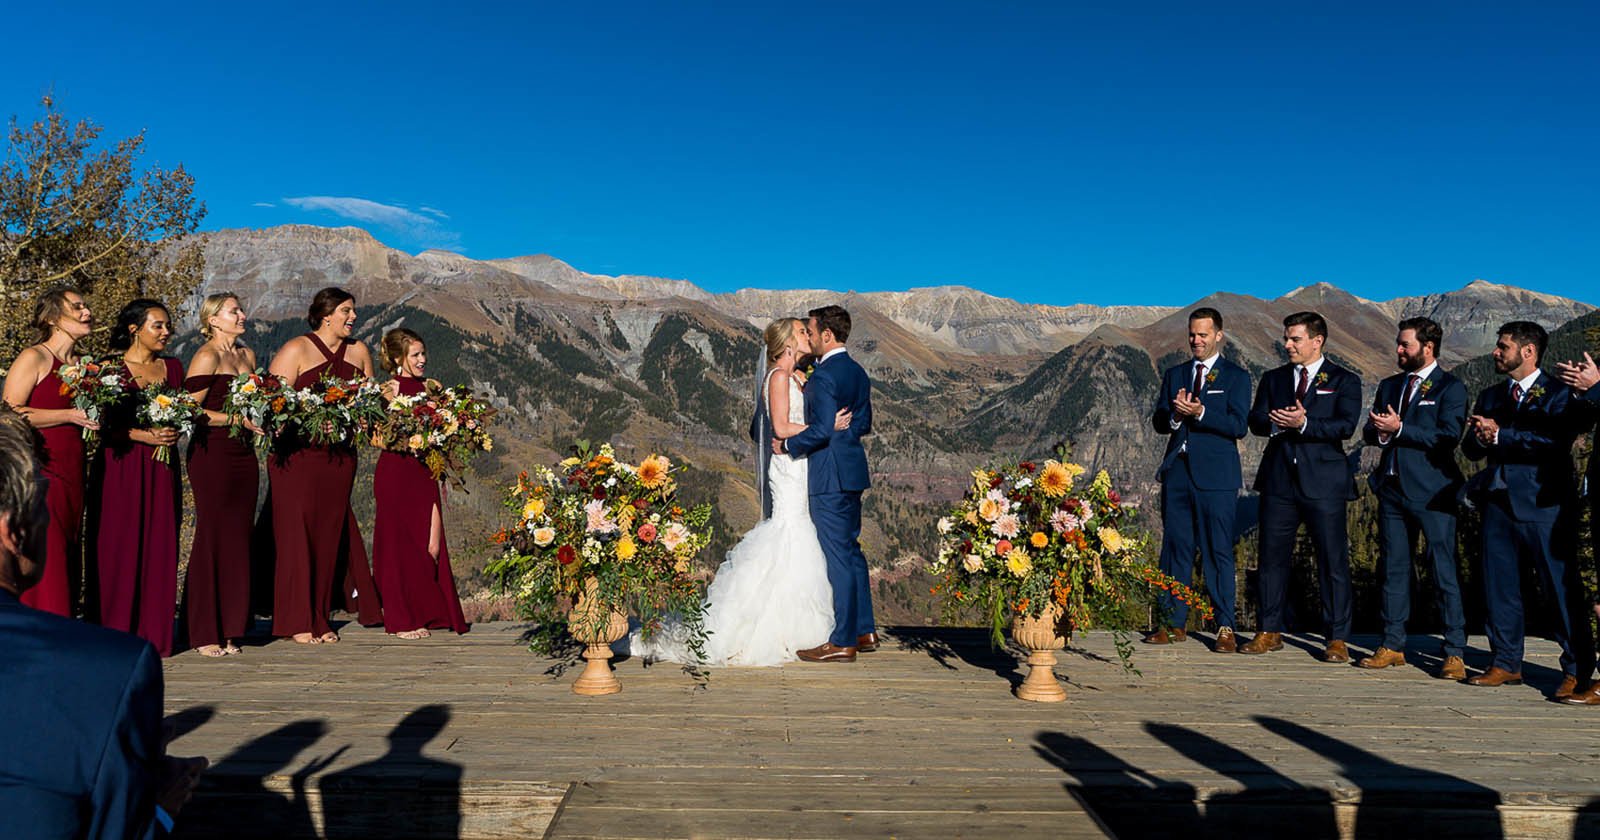 Wedding Shot List: Essential Moments a Photographer Should Capture